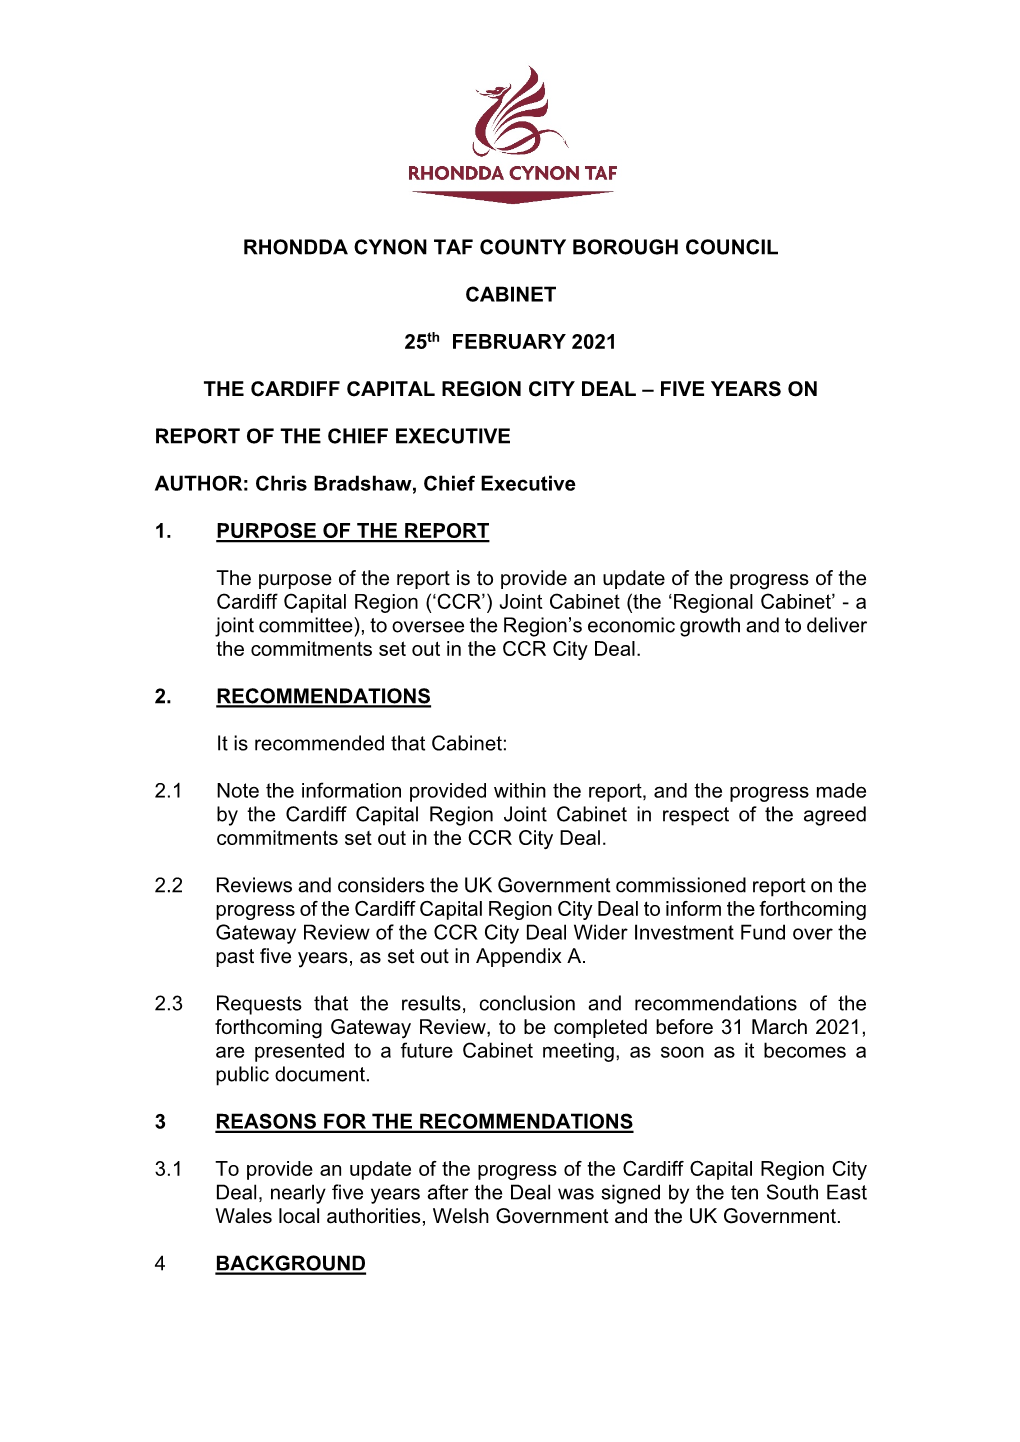 Rhondda Cynon Taf County Borough Council Cabinet